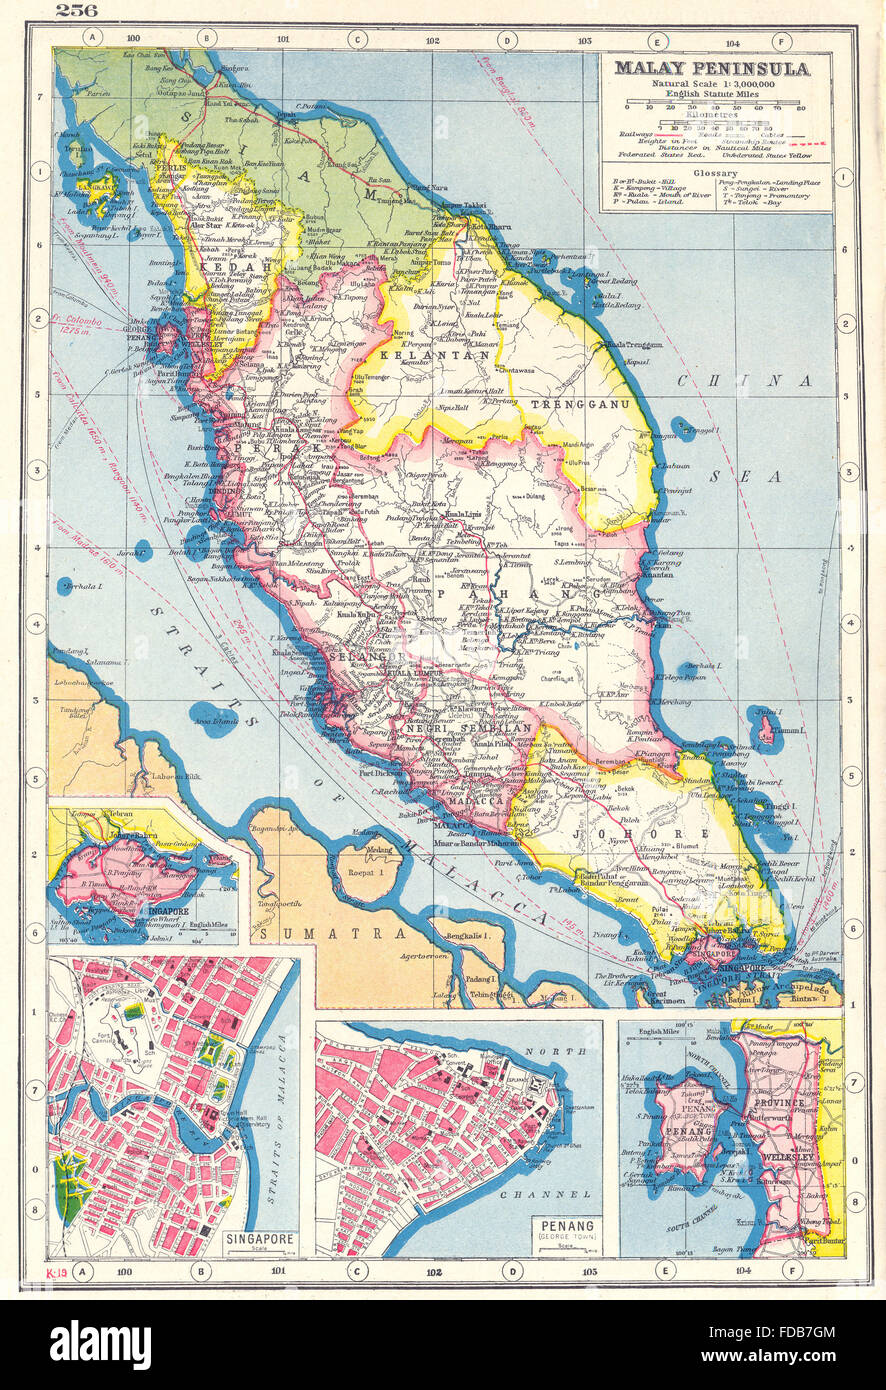 MALAY PENINSULA: West Malaysia; inset Singapore Penang Wellesley, 1920 old map Stock Photo - Alamy